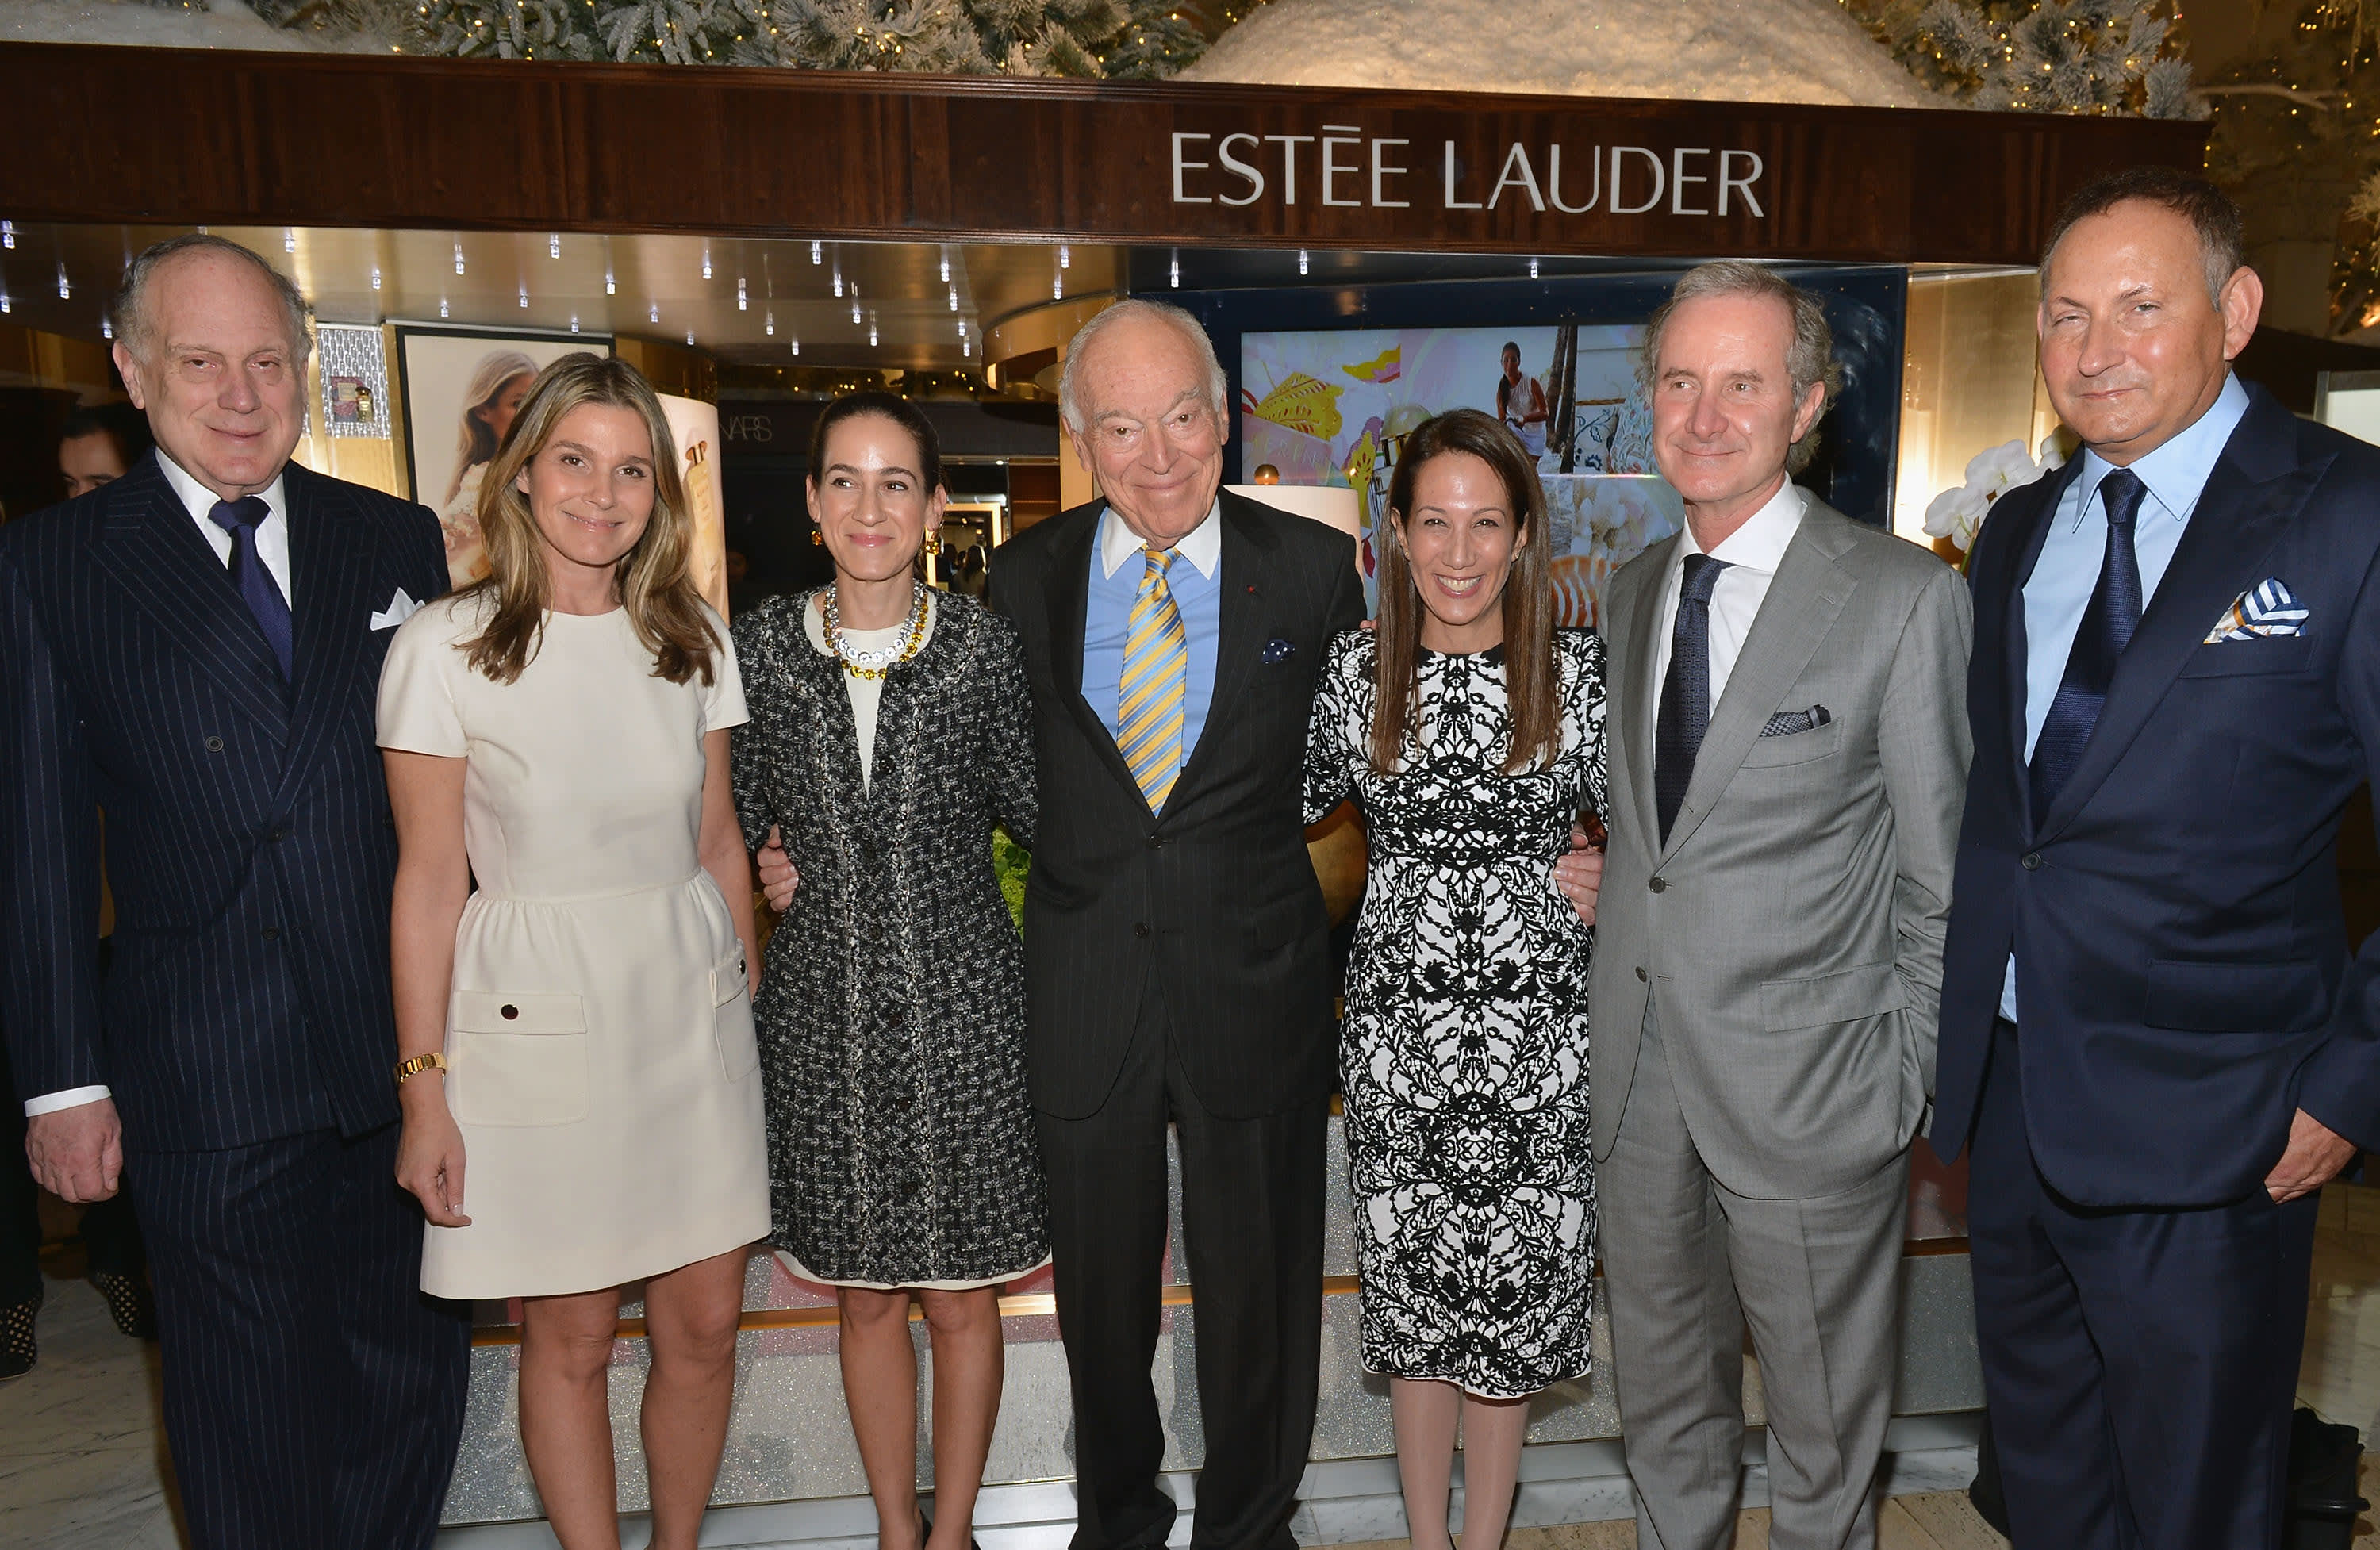 Family affair: Who will run the Lauder dynasty?